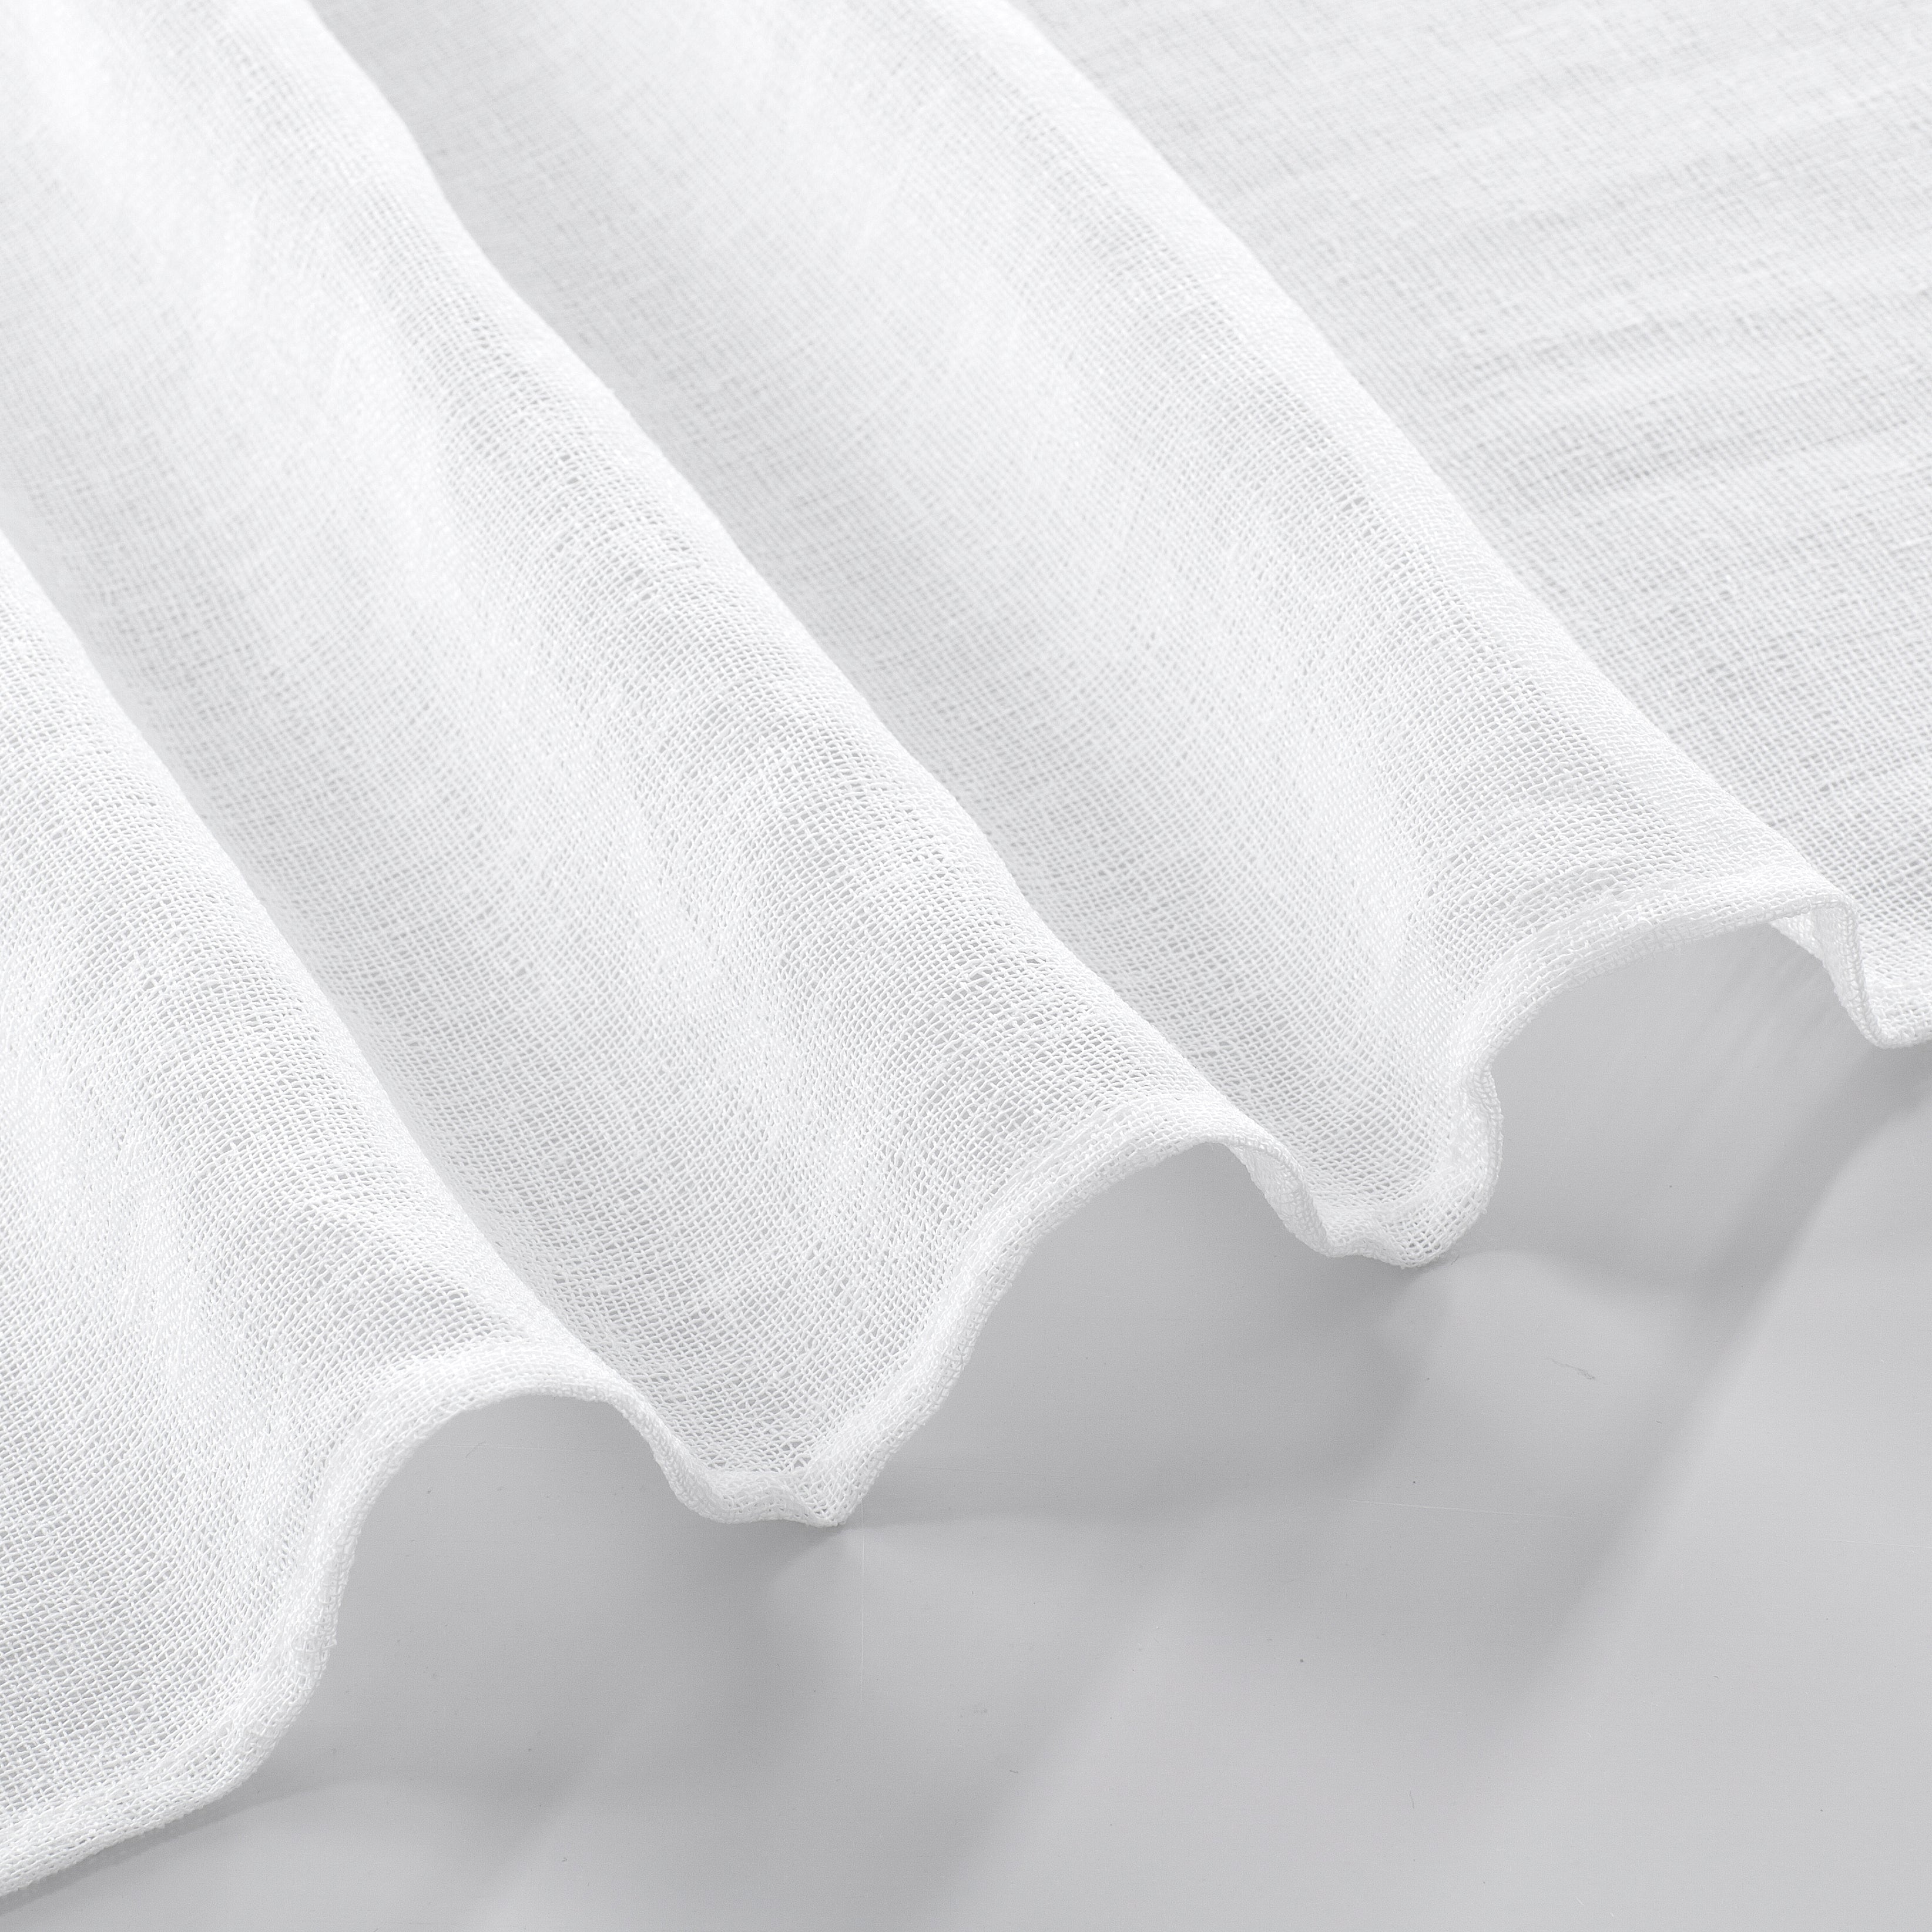 Dainty Home Natural Tassels 3D Linen Look Textured Tassels Designed Shower Curtain